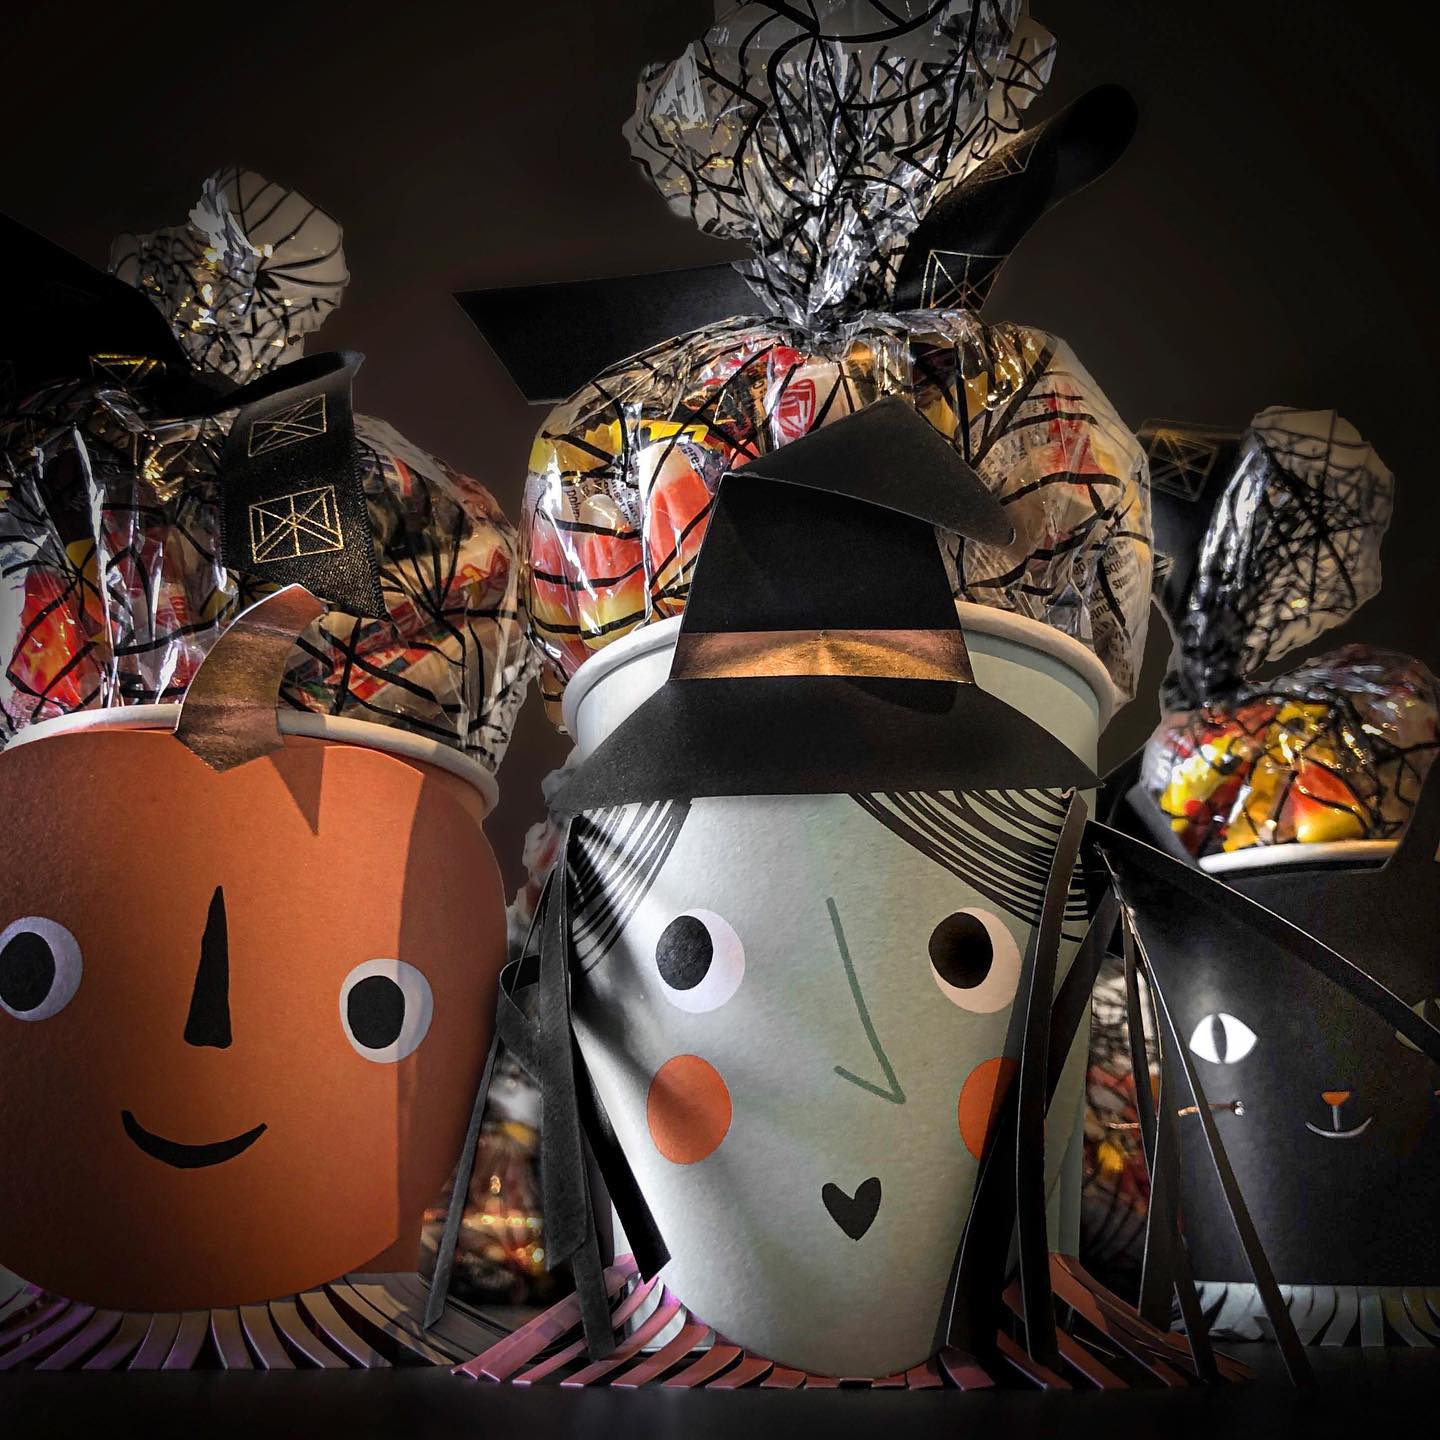 The spooky treats are ready! 
.
.
.
#spooky #meadedesigngroup #meadedesign #treats #halloween #fun #candy #halloweentreats #halloween2021 #picoftheday #instagood #instadesign #yyj #yyjhalloween